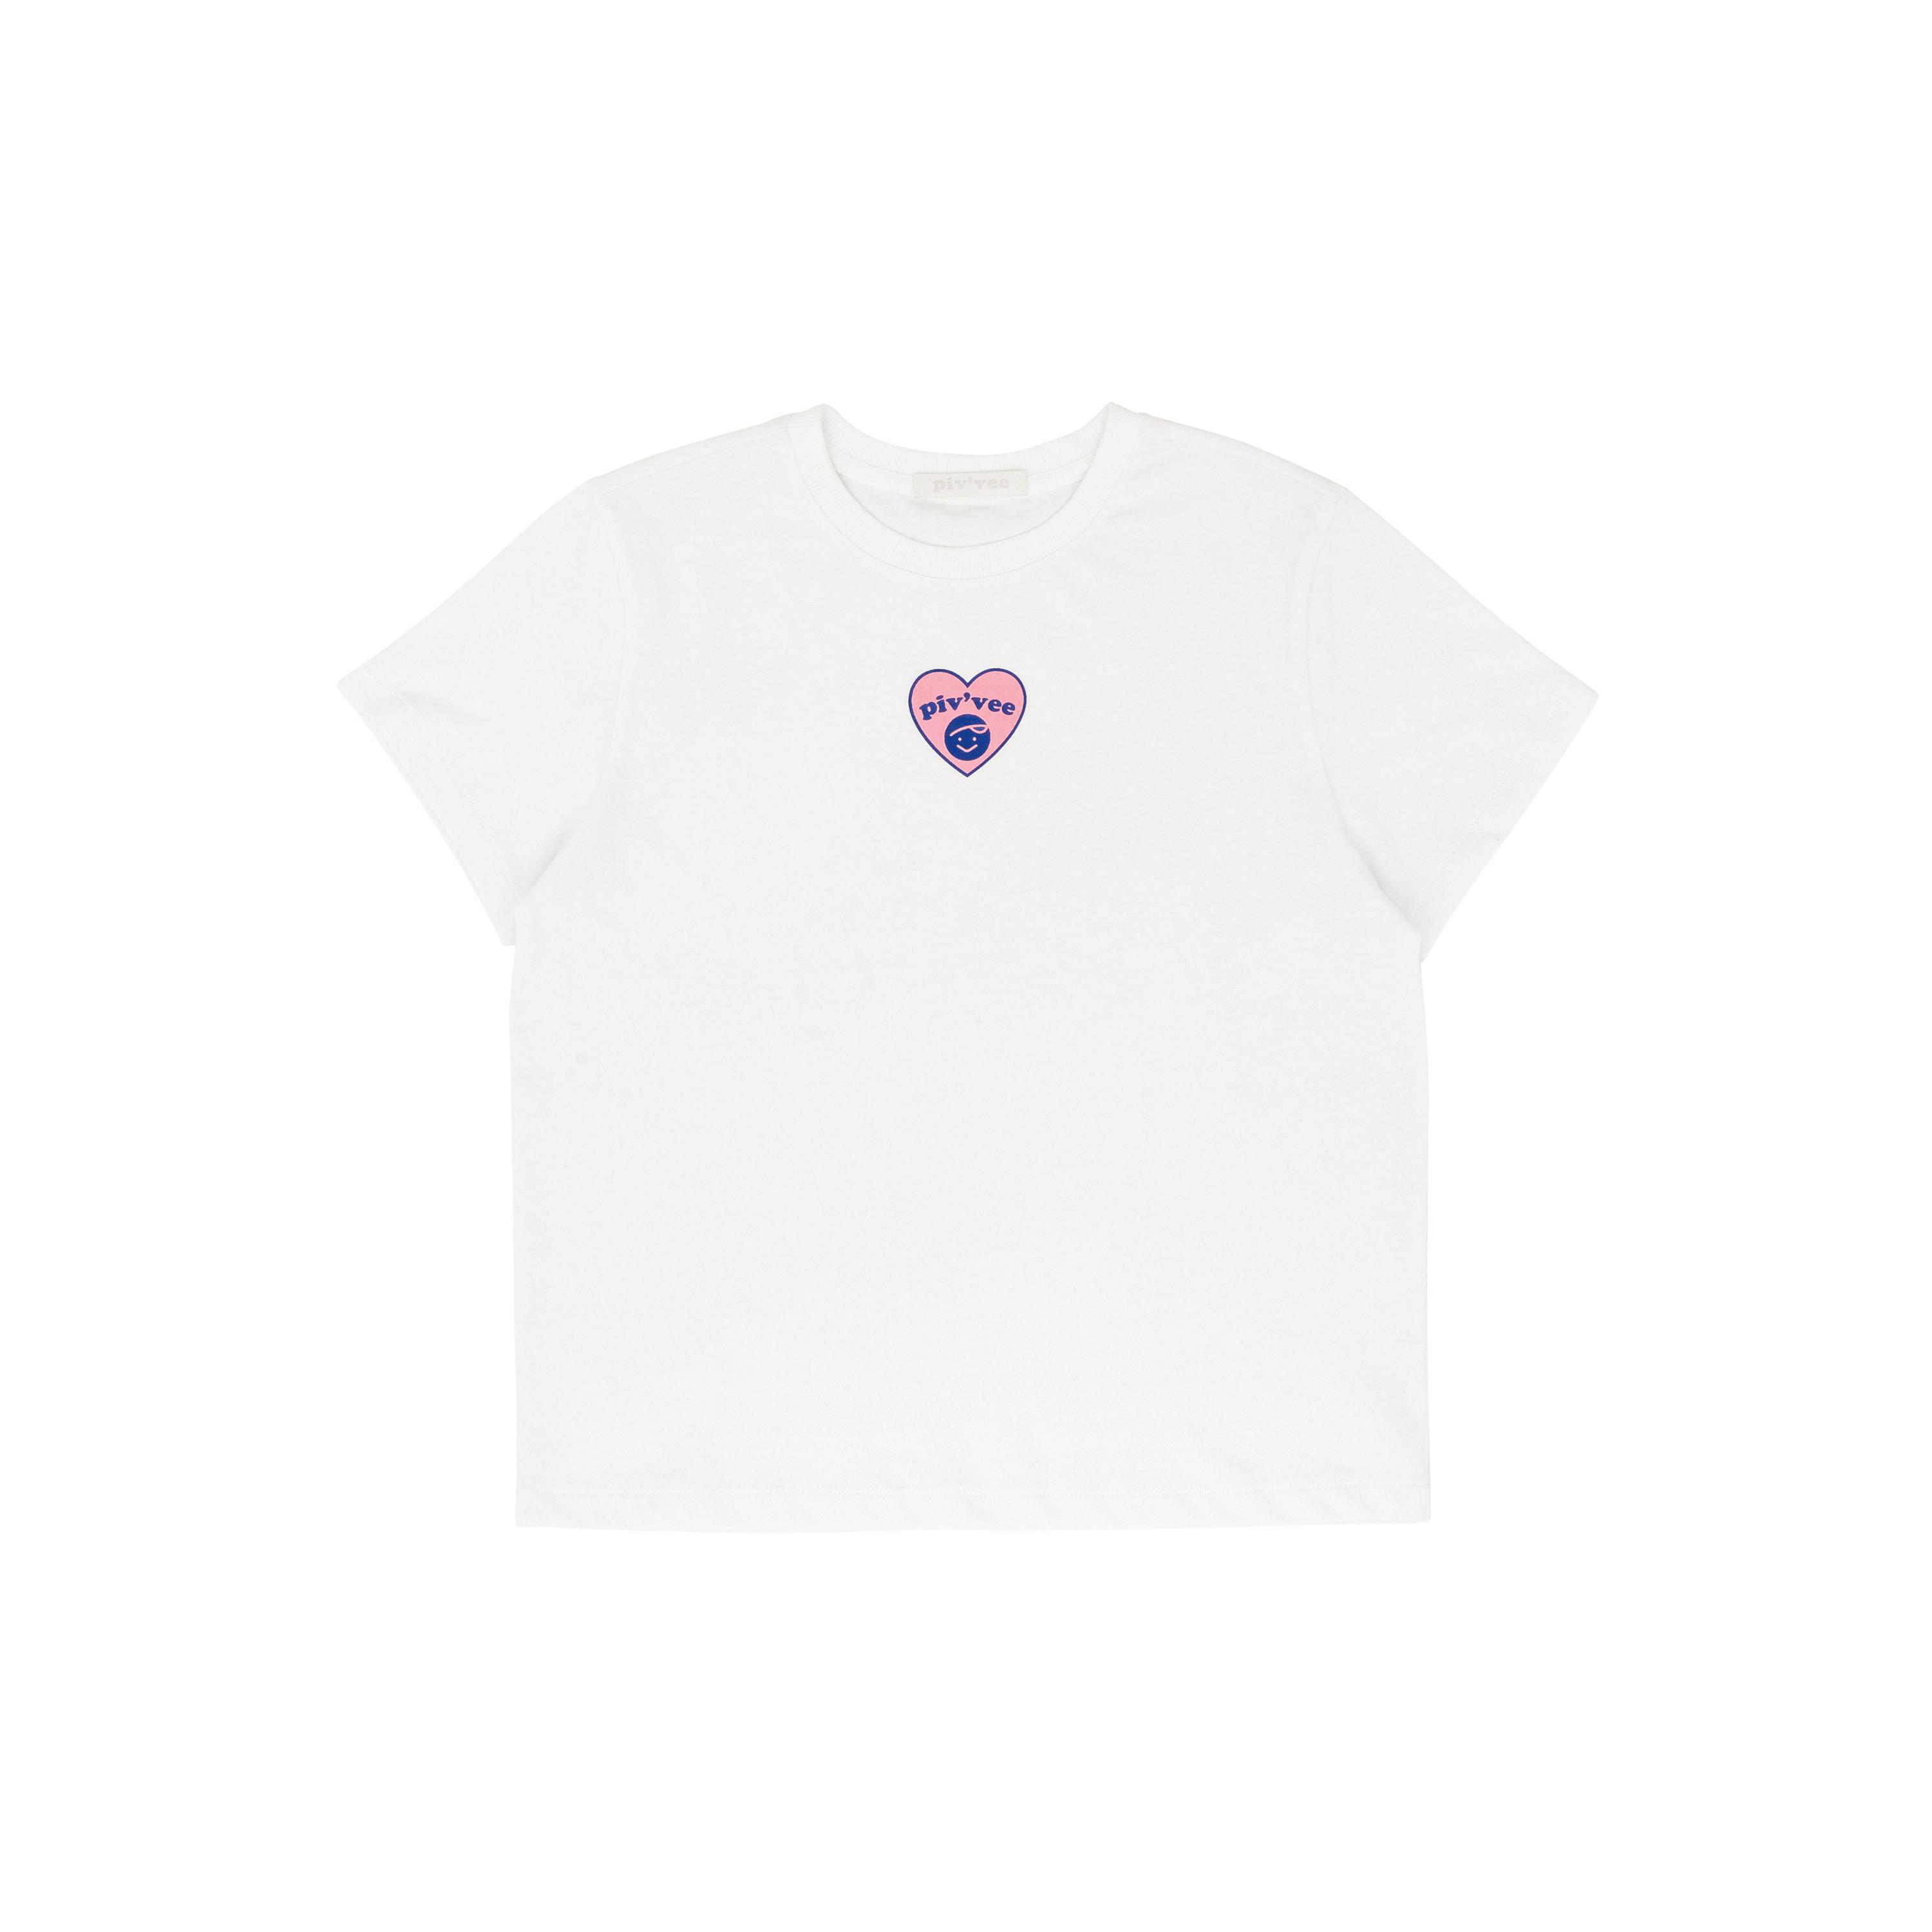 [Reorder] Heart piv&#039;vee T-shirt